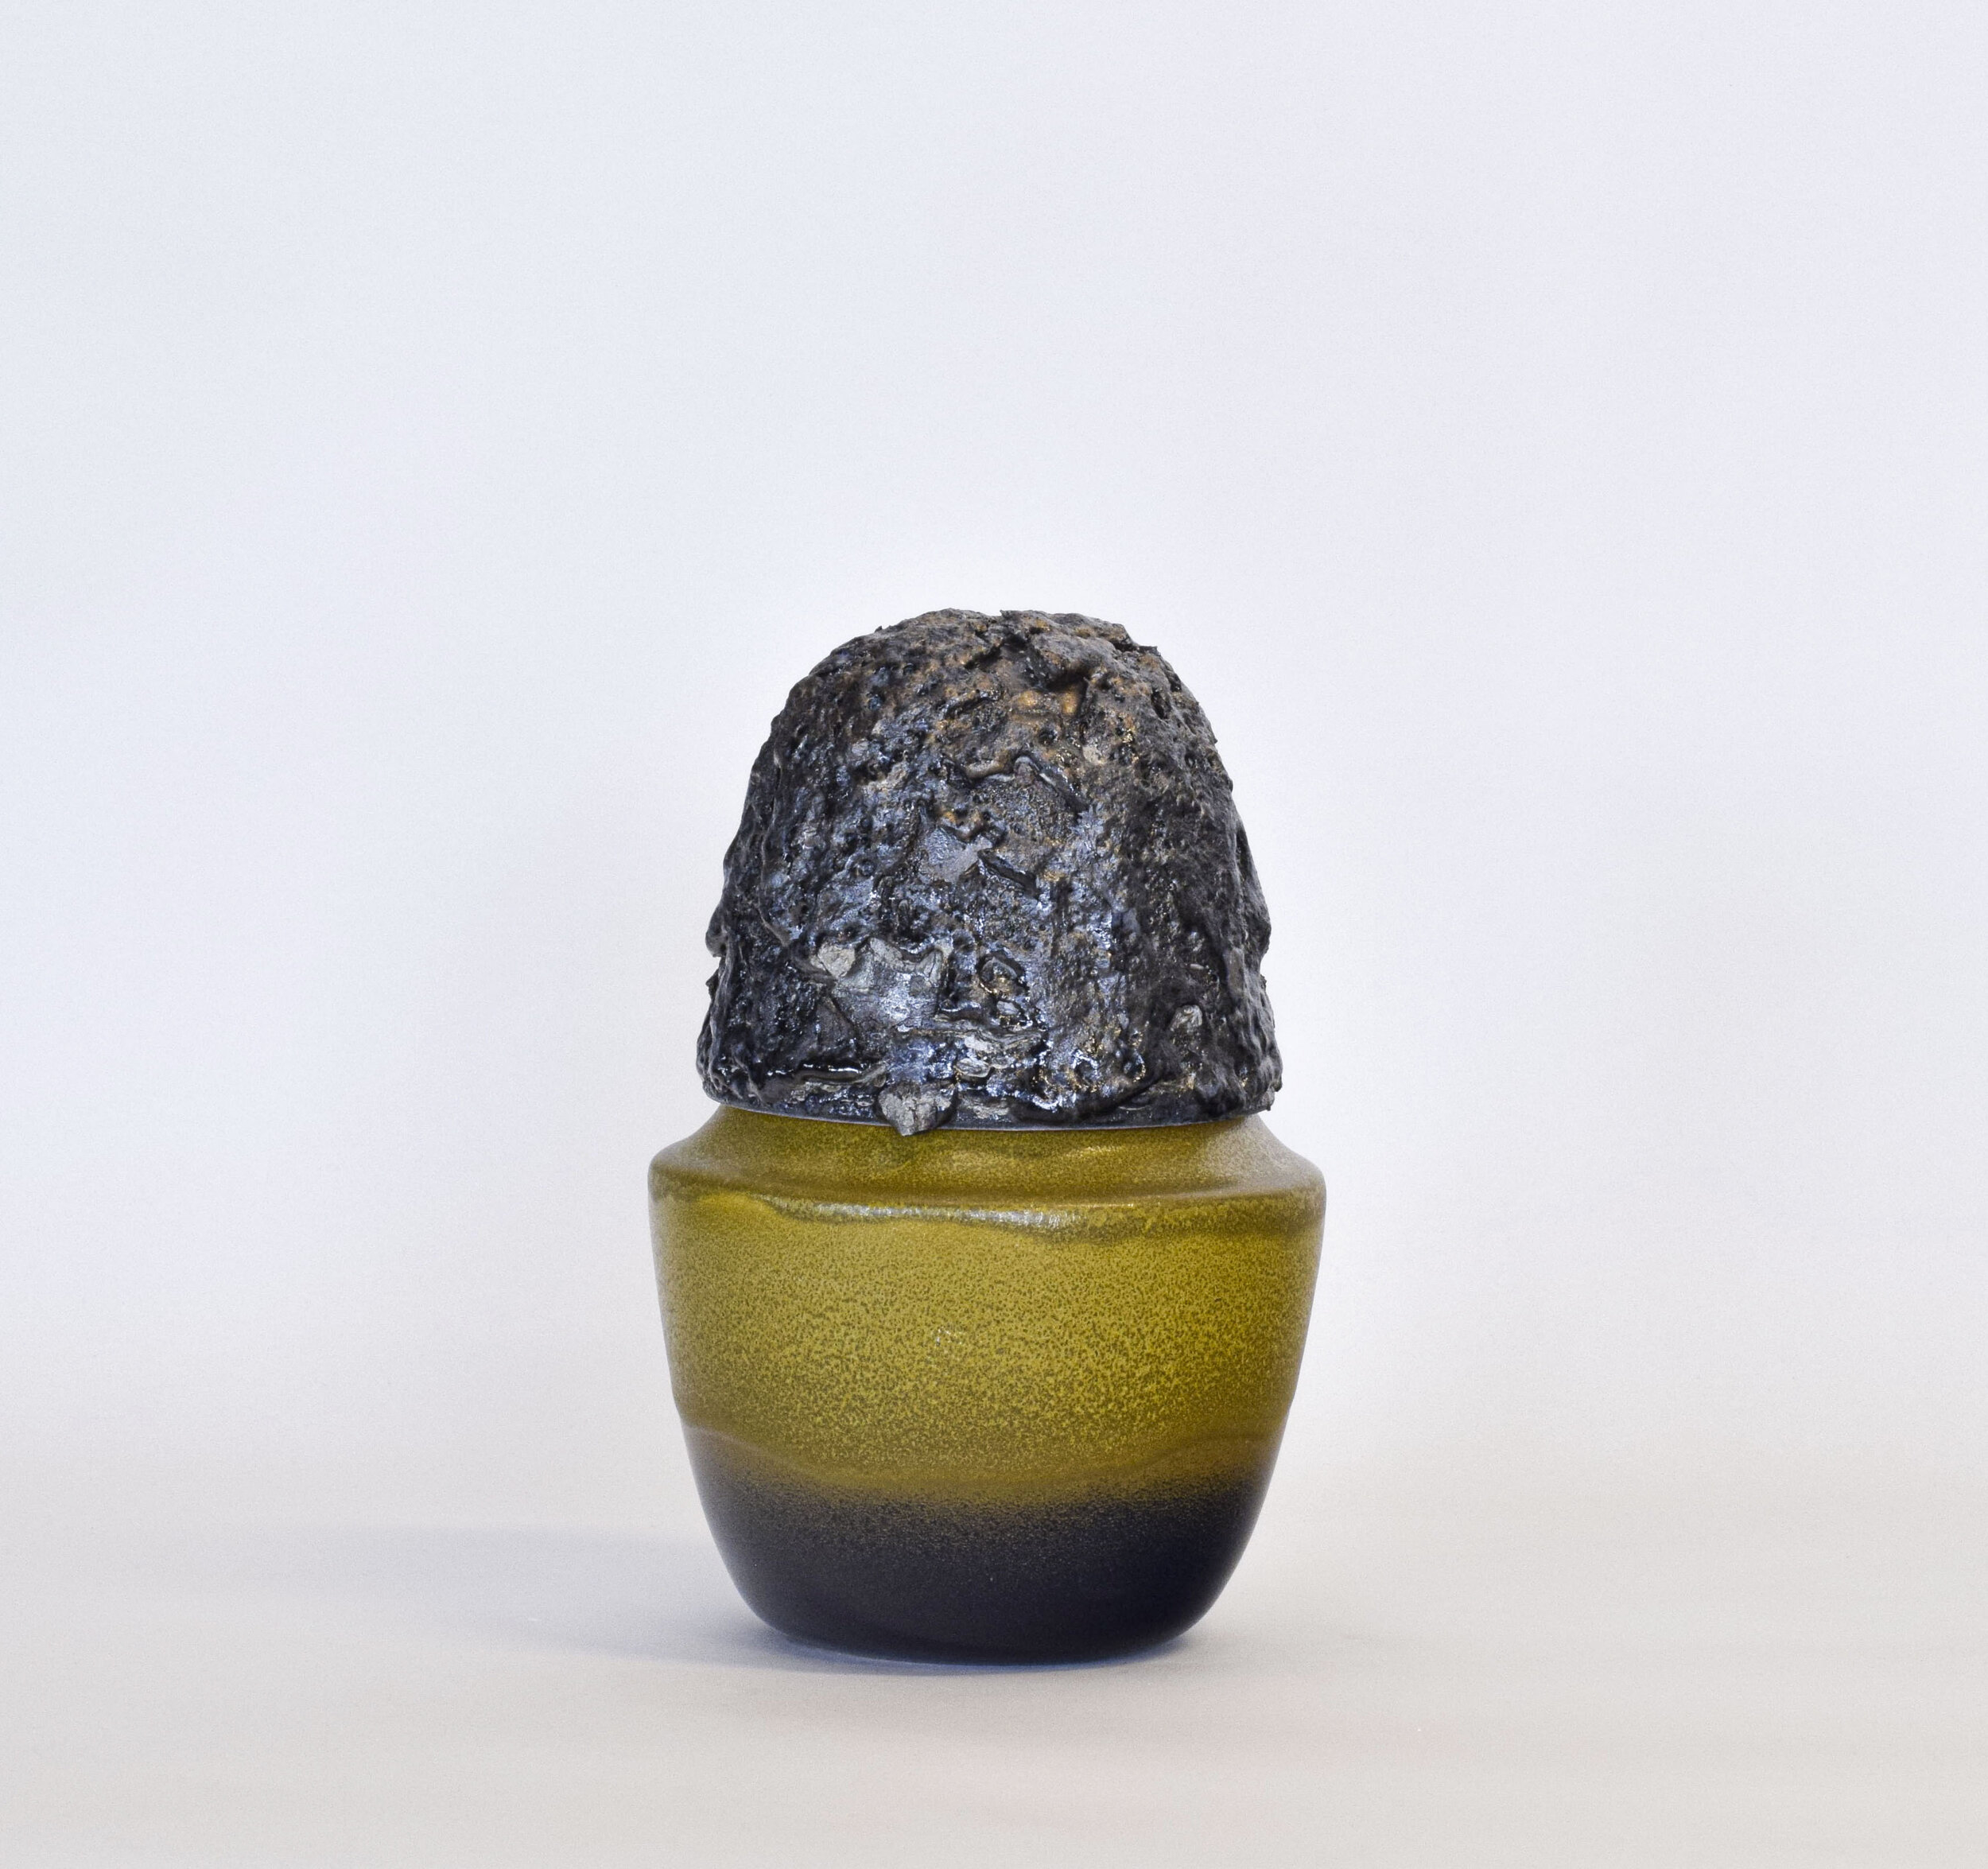  Urn (sliver-gold-blue)  stoneware, glaze  12” x 8’ x 8” 